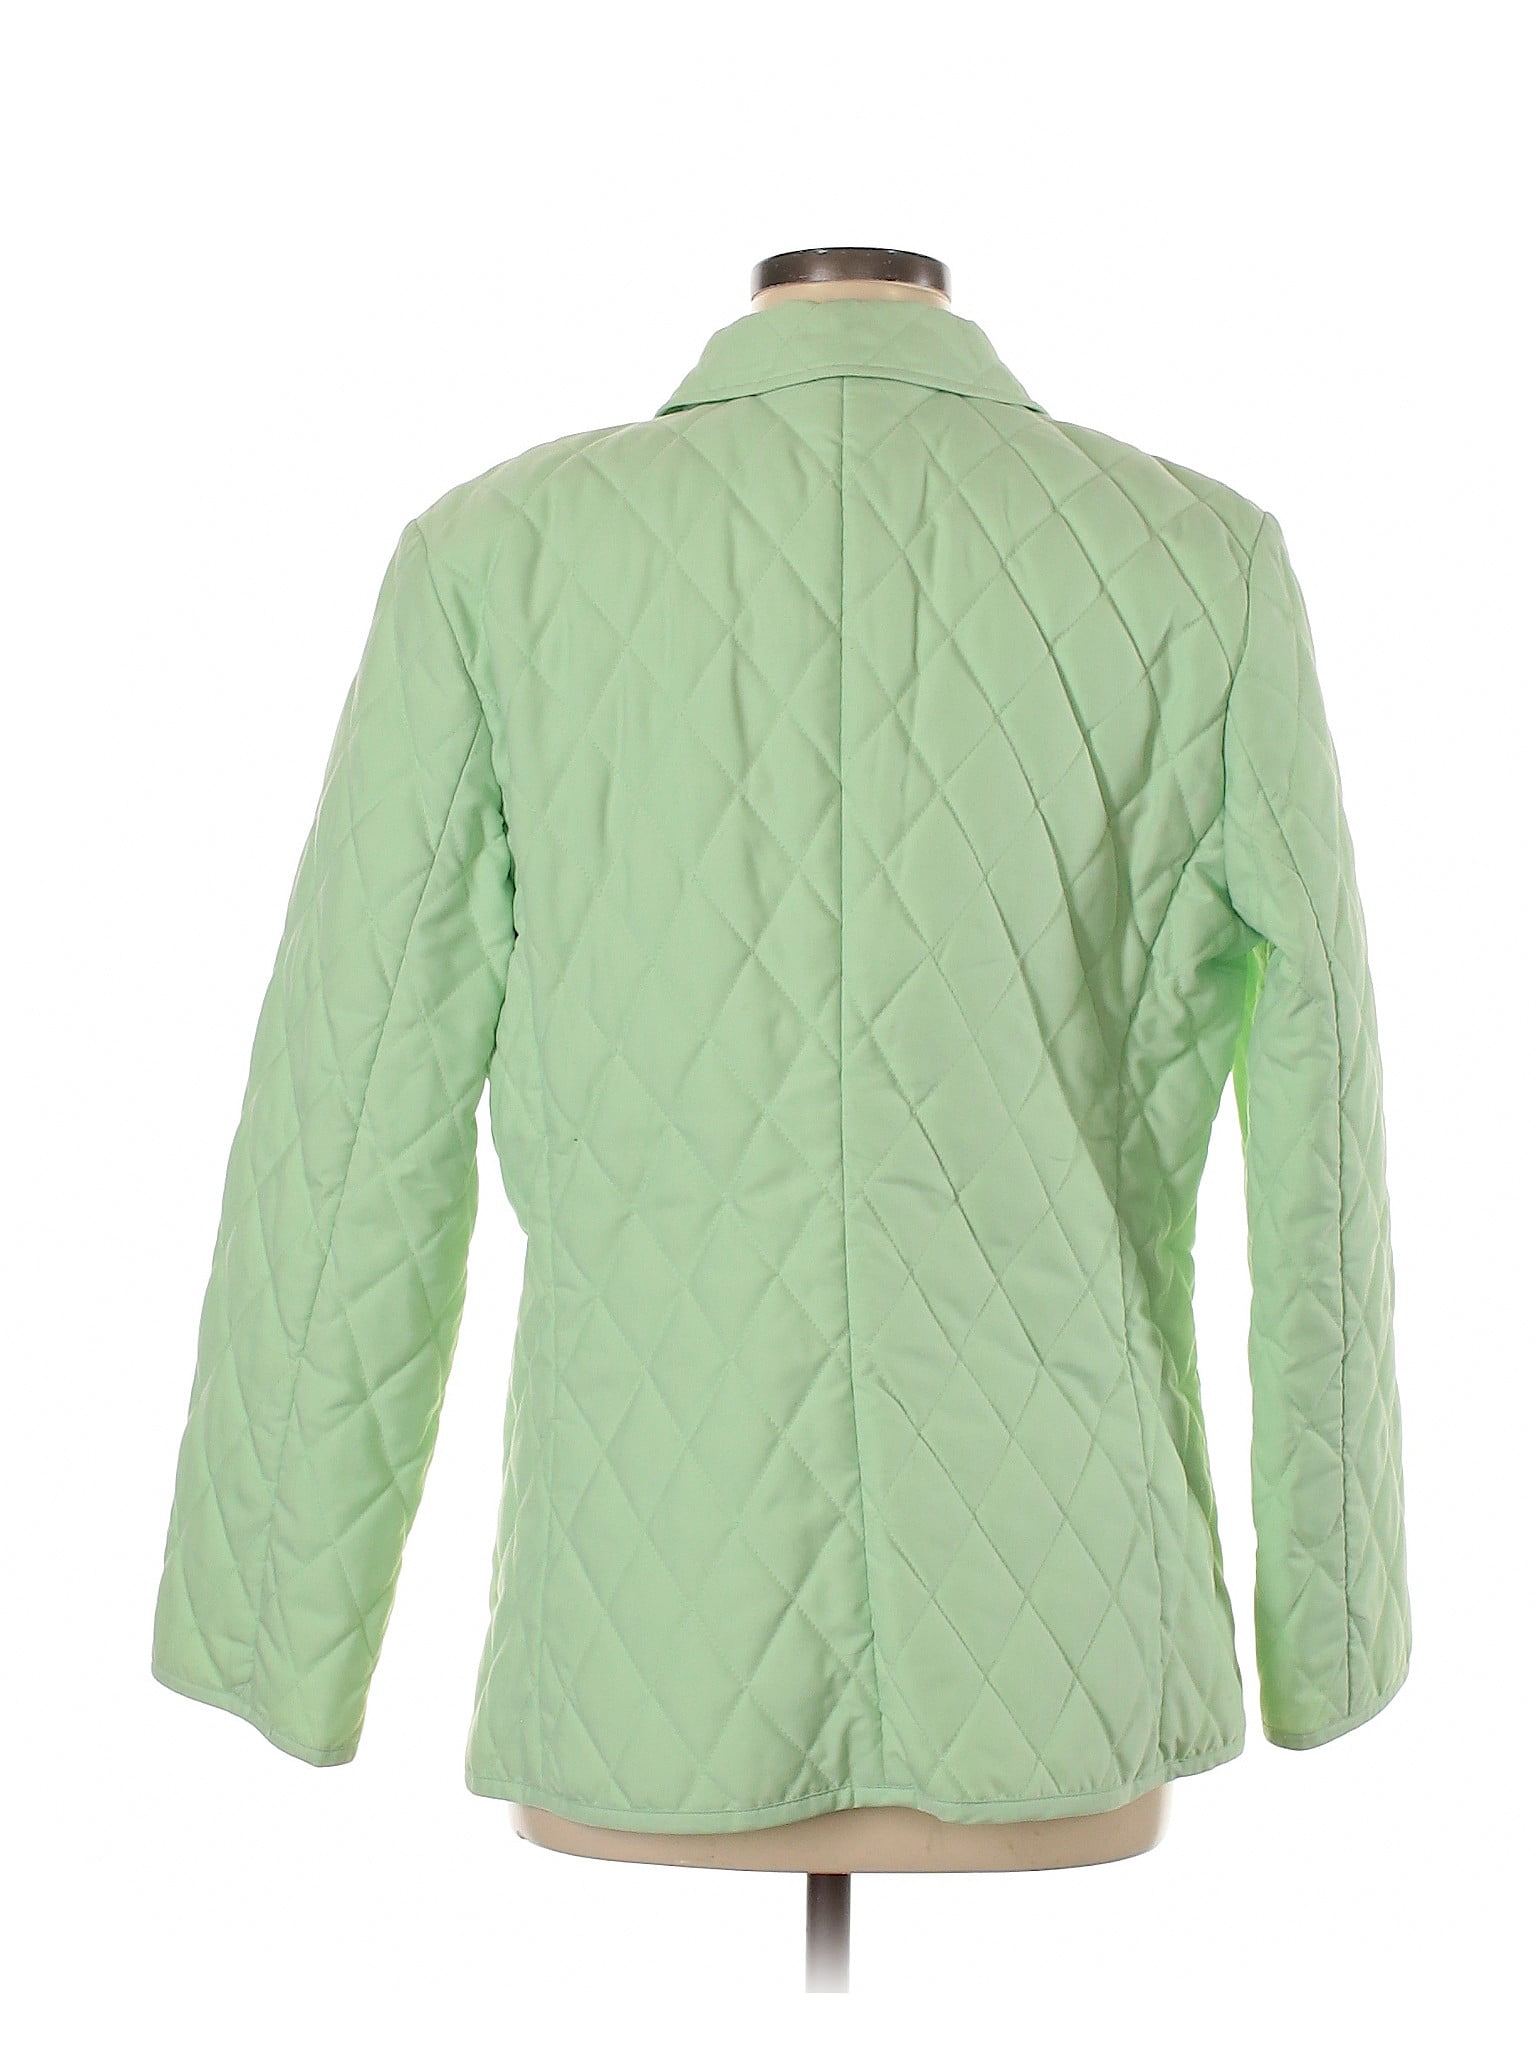 brooks jackets womens green